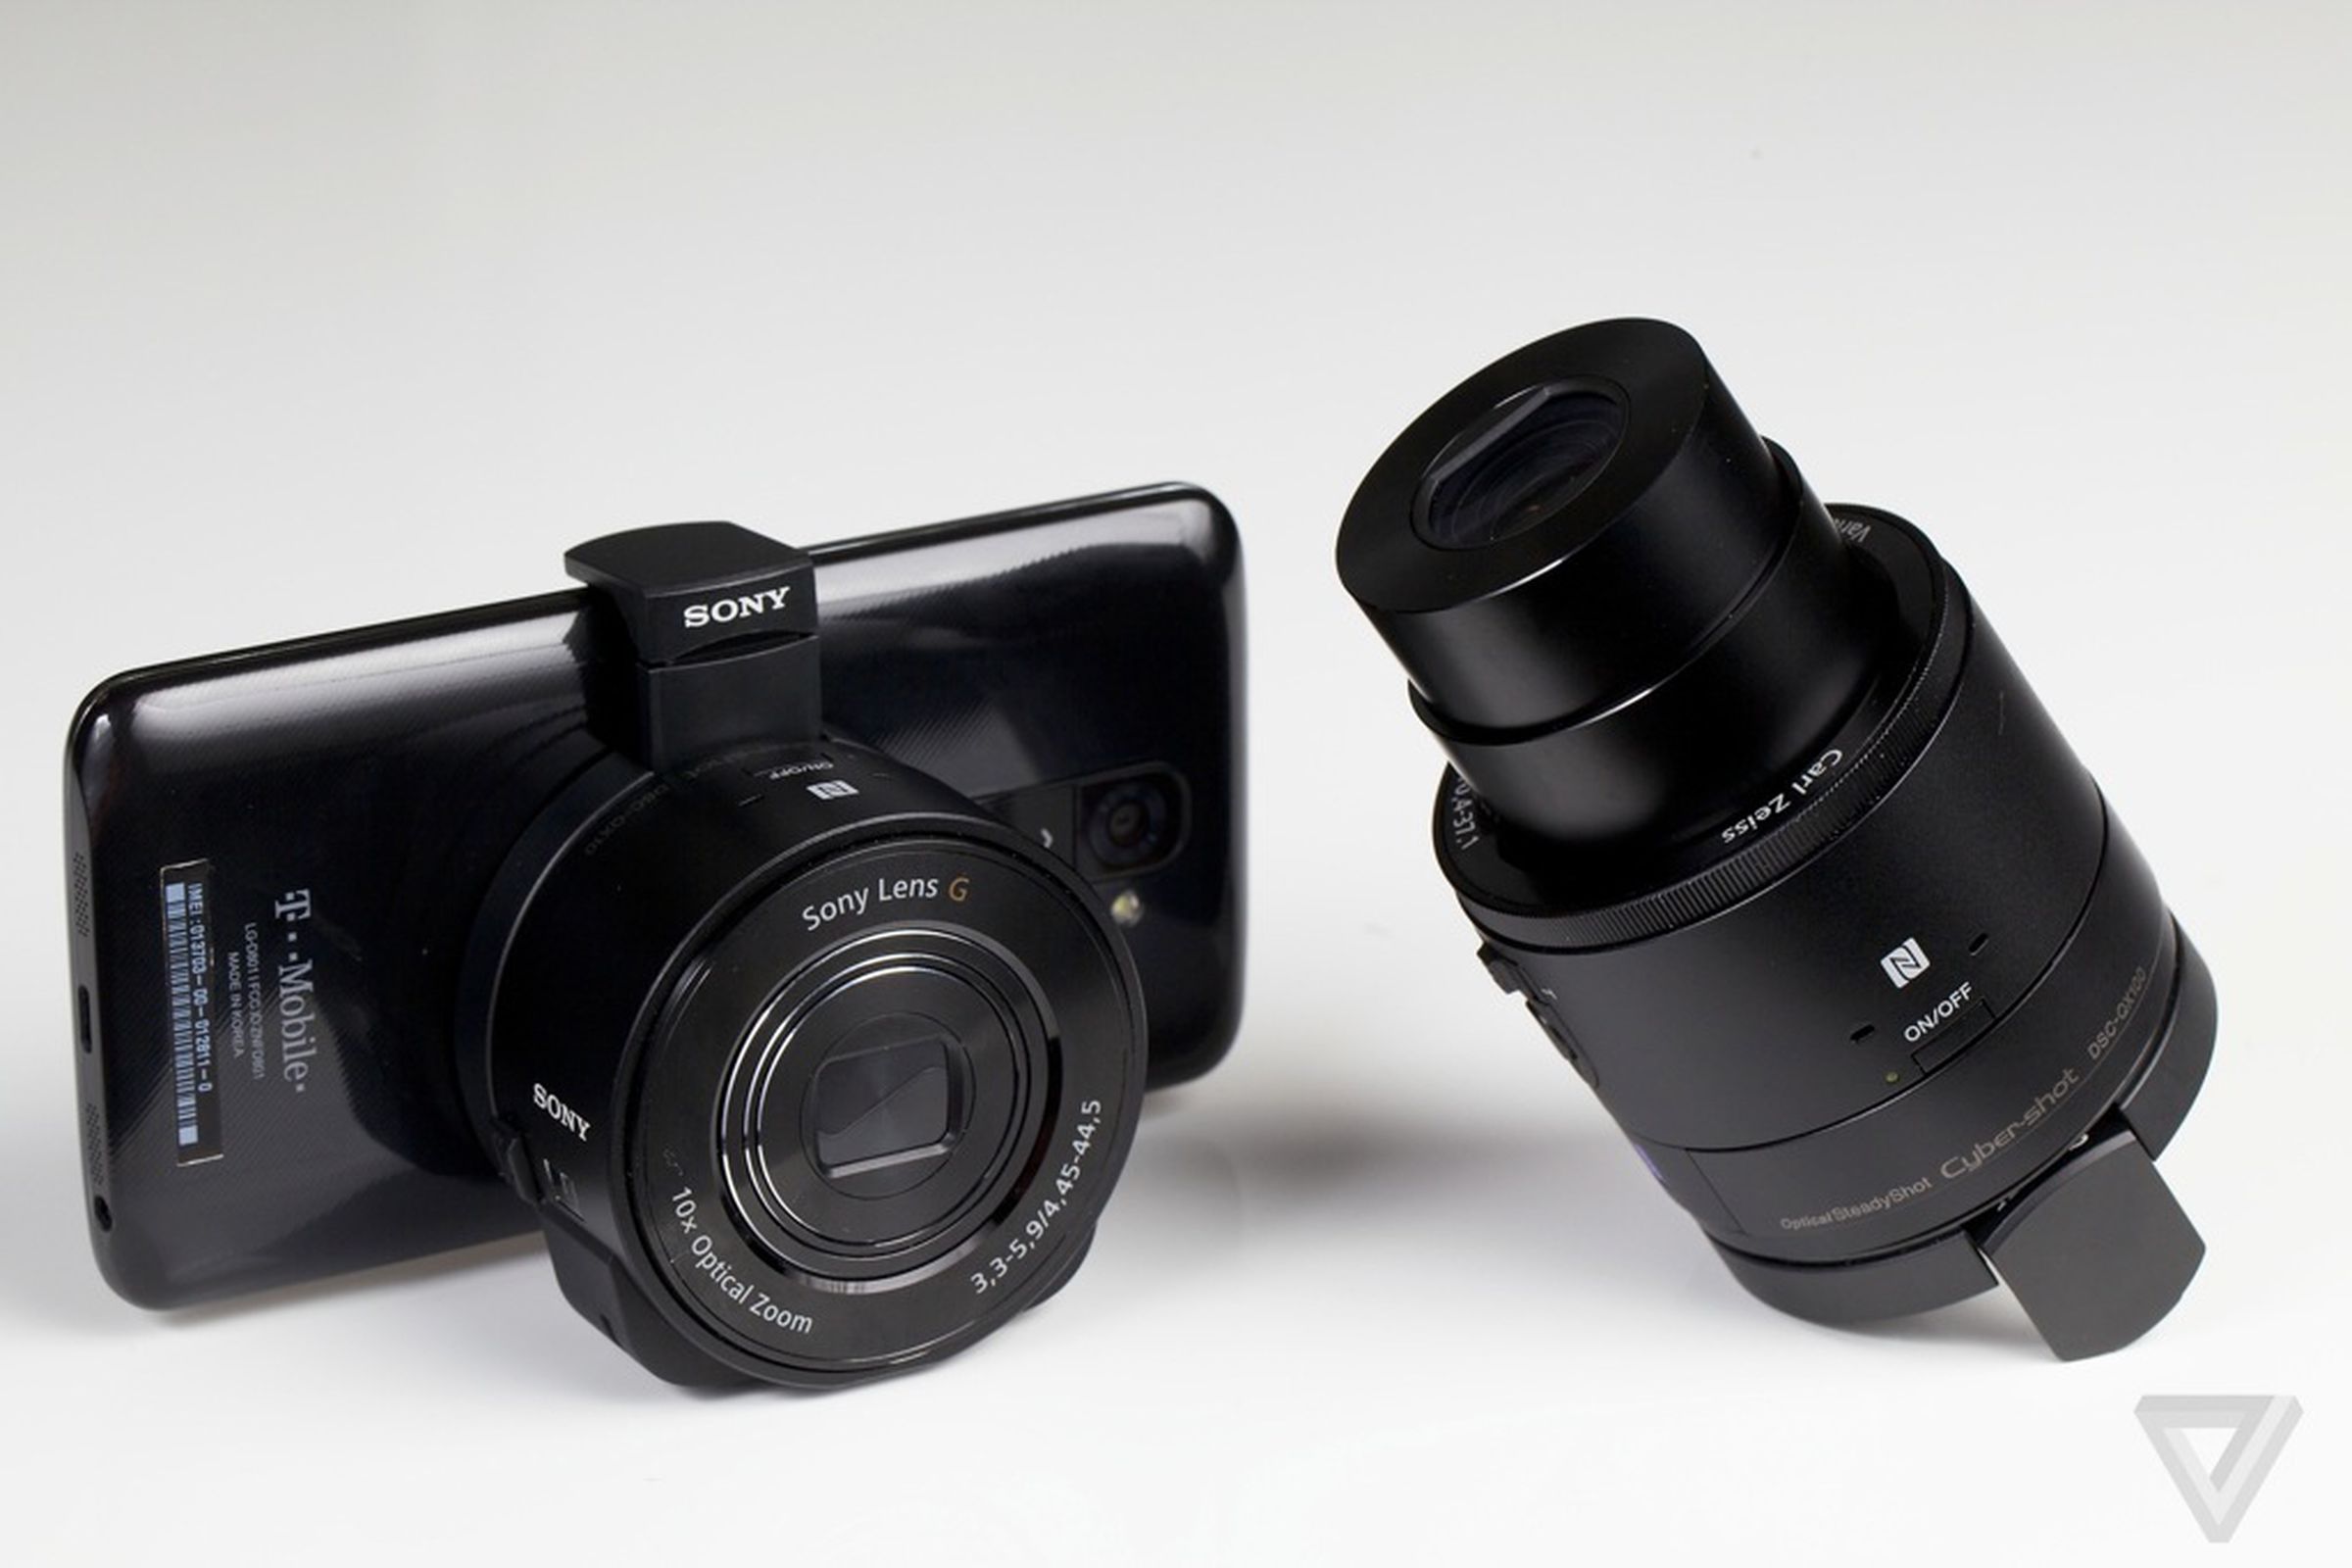 Sony Lens cameras QX10 and QX100